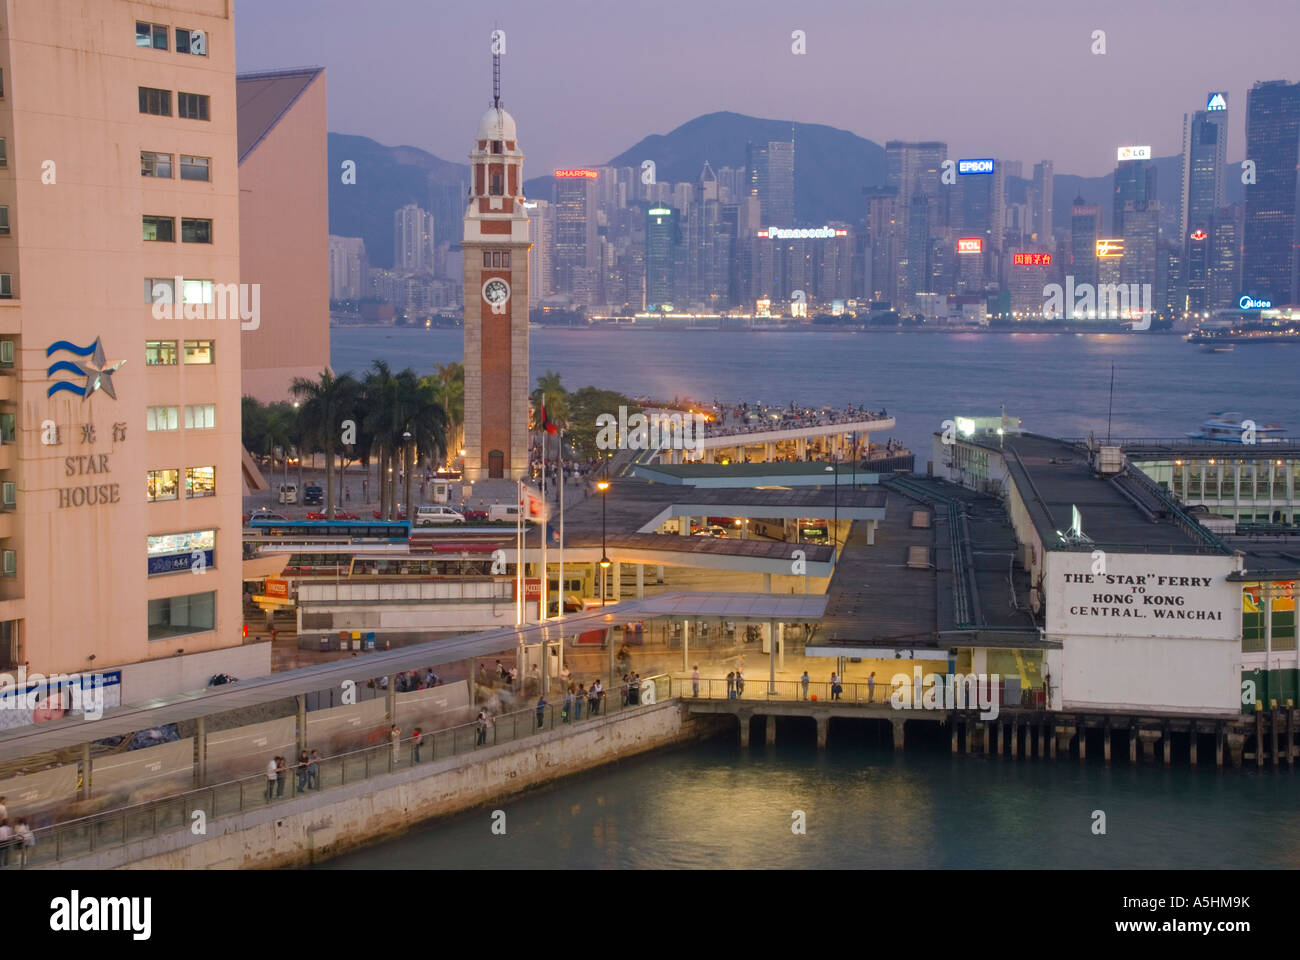 Asia China Hong Kong Kowloon star ferry pier 2006 Stock Photo